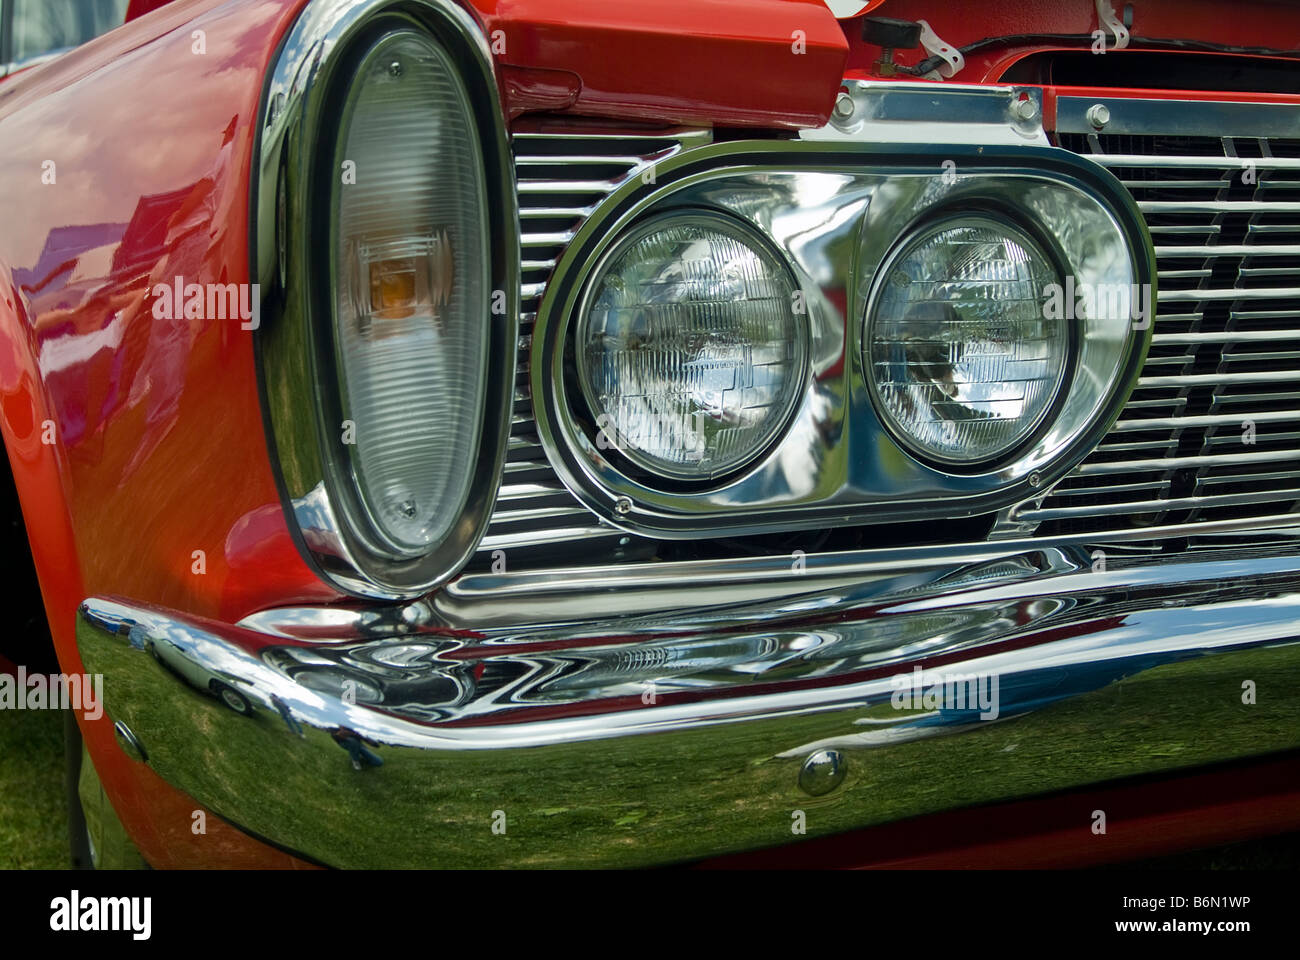 Classic Cars car Auto Automobile Antique Autos 60's 70's dodge chrysler headlights Red Chrome Bumper Grille Stock Photo